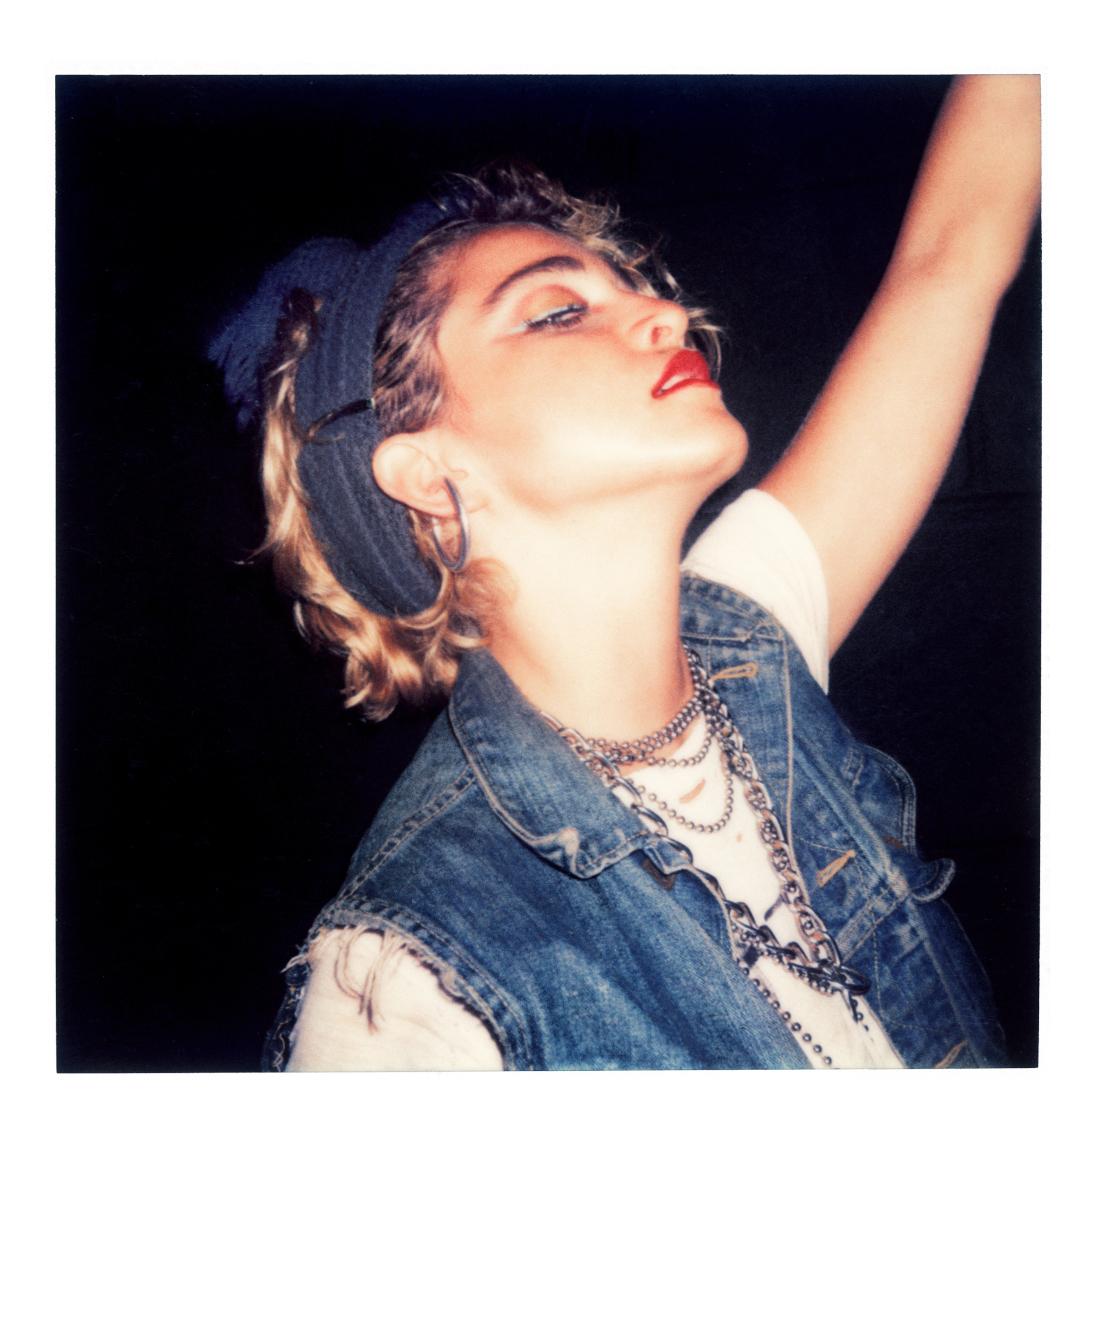 Maripol Color Photograph - Madonna, "Everybody" - NYC